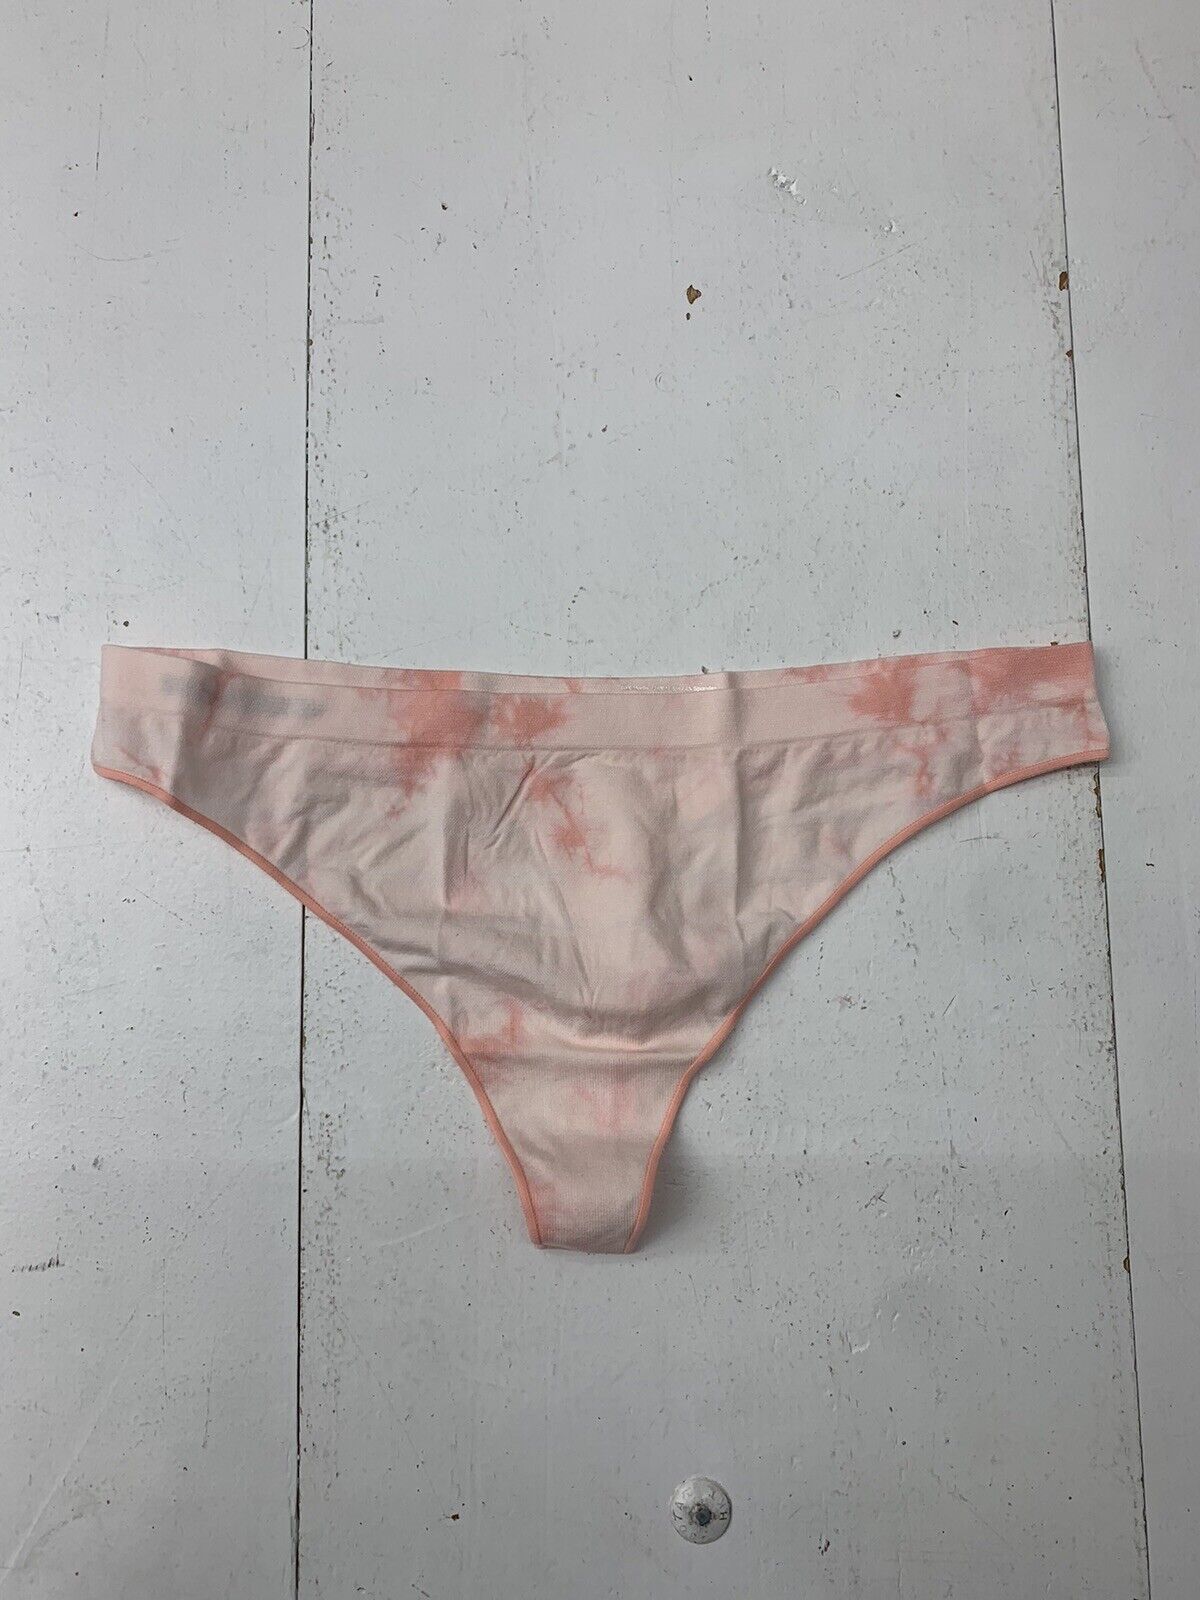 Bombas Womens Pink Thong Underwear Size XL